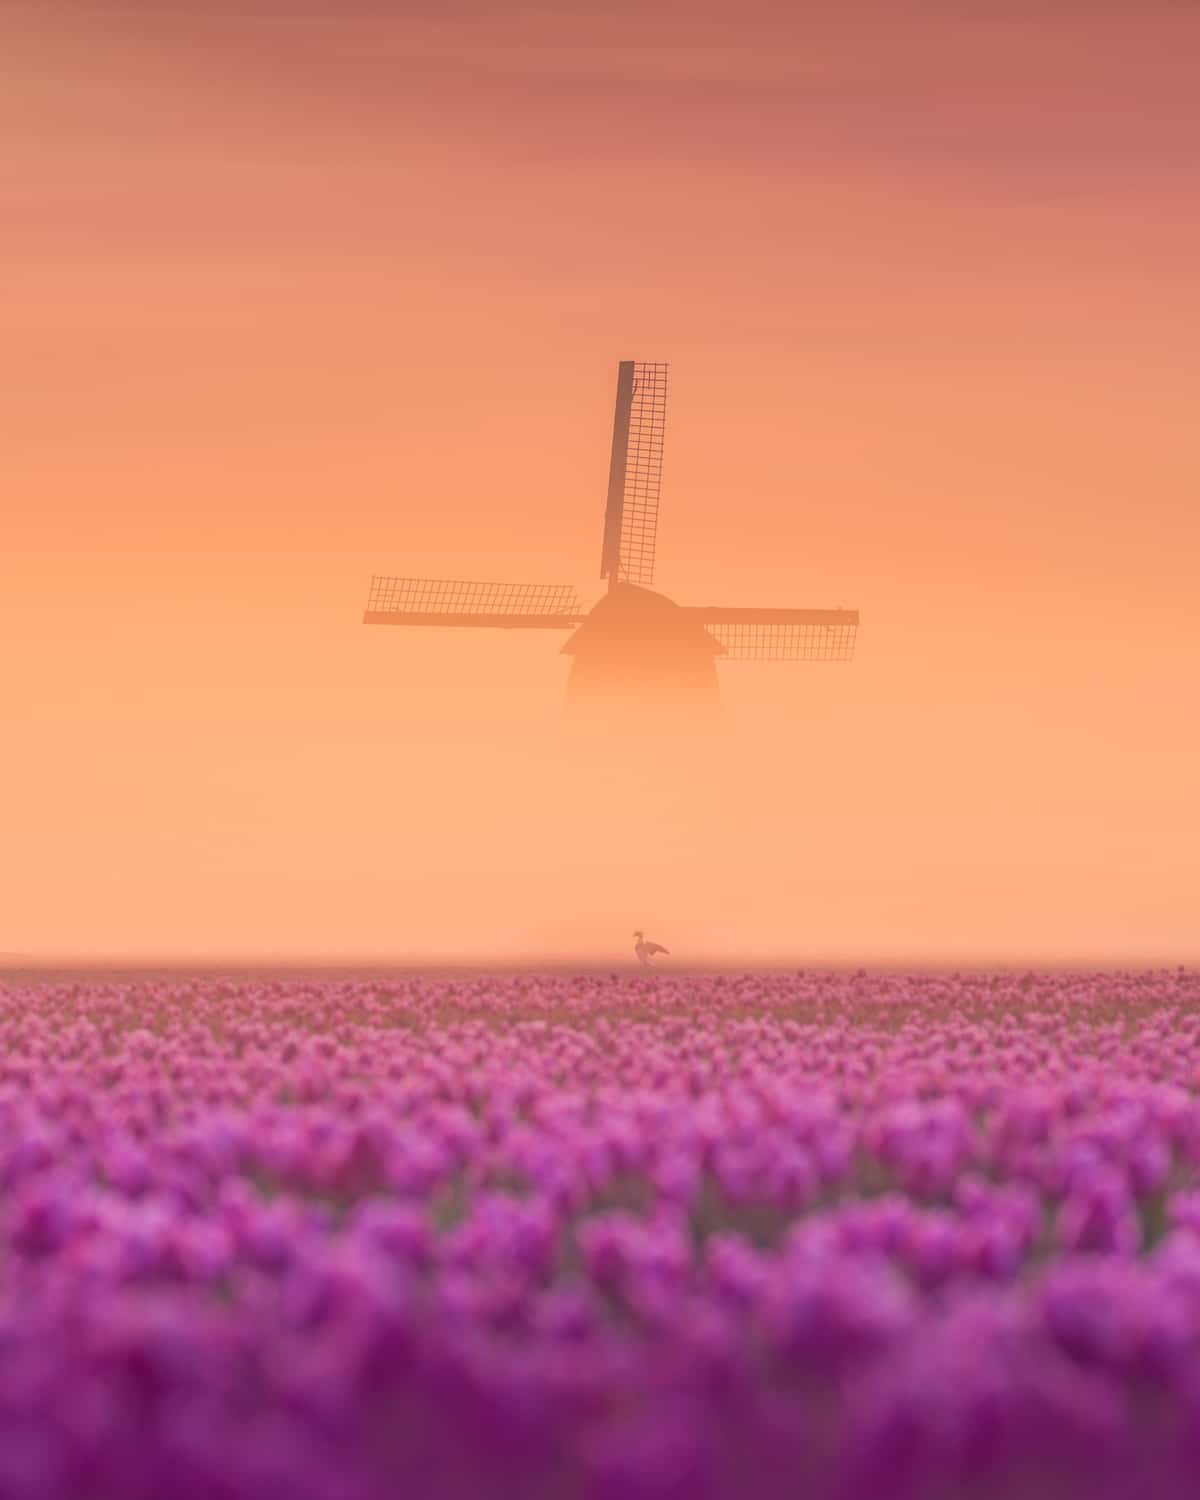 Windmill in the Fog by a Tulip Field